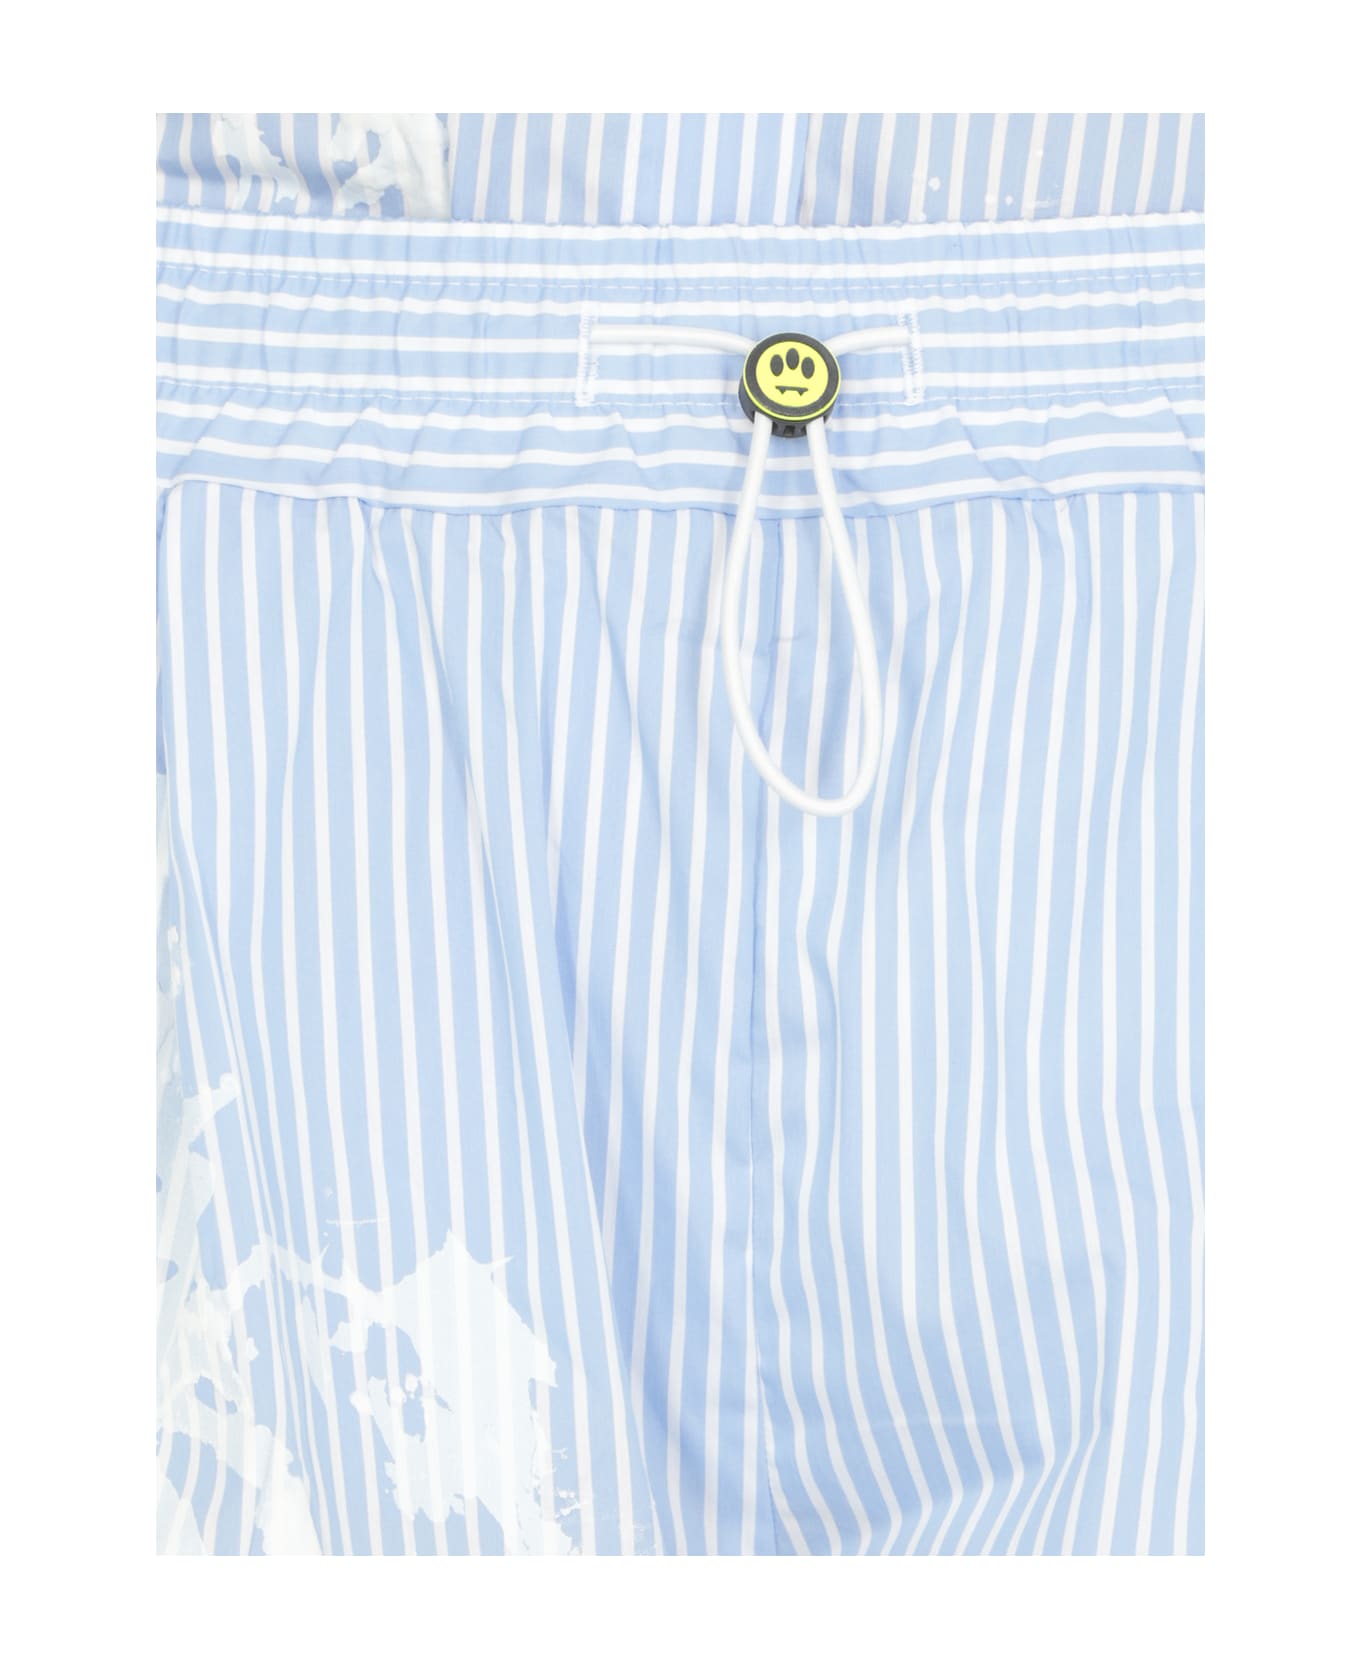 Barrow Striped Shorts - Light Blue ショートパンツ